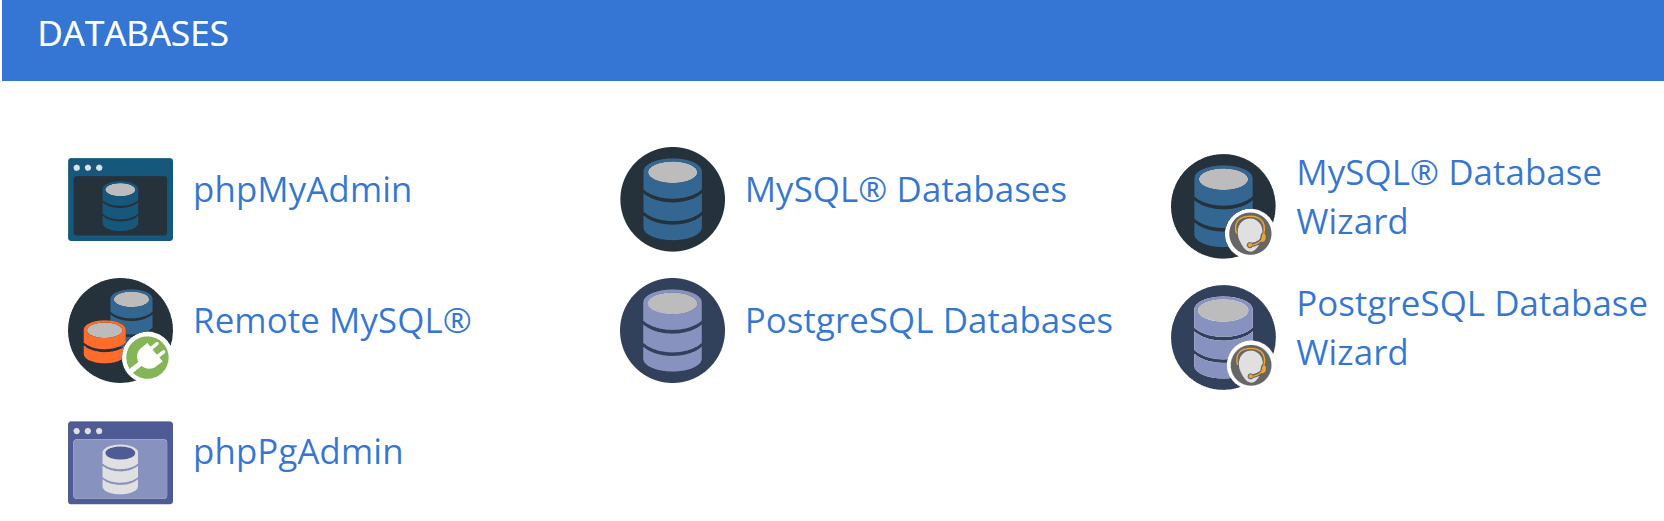 Accessing MySQL databases via cPanel. 